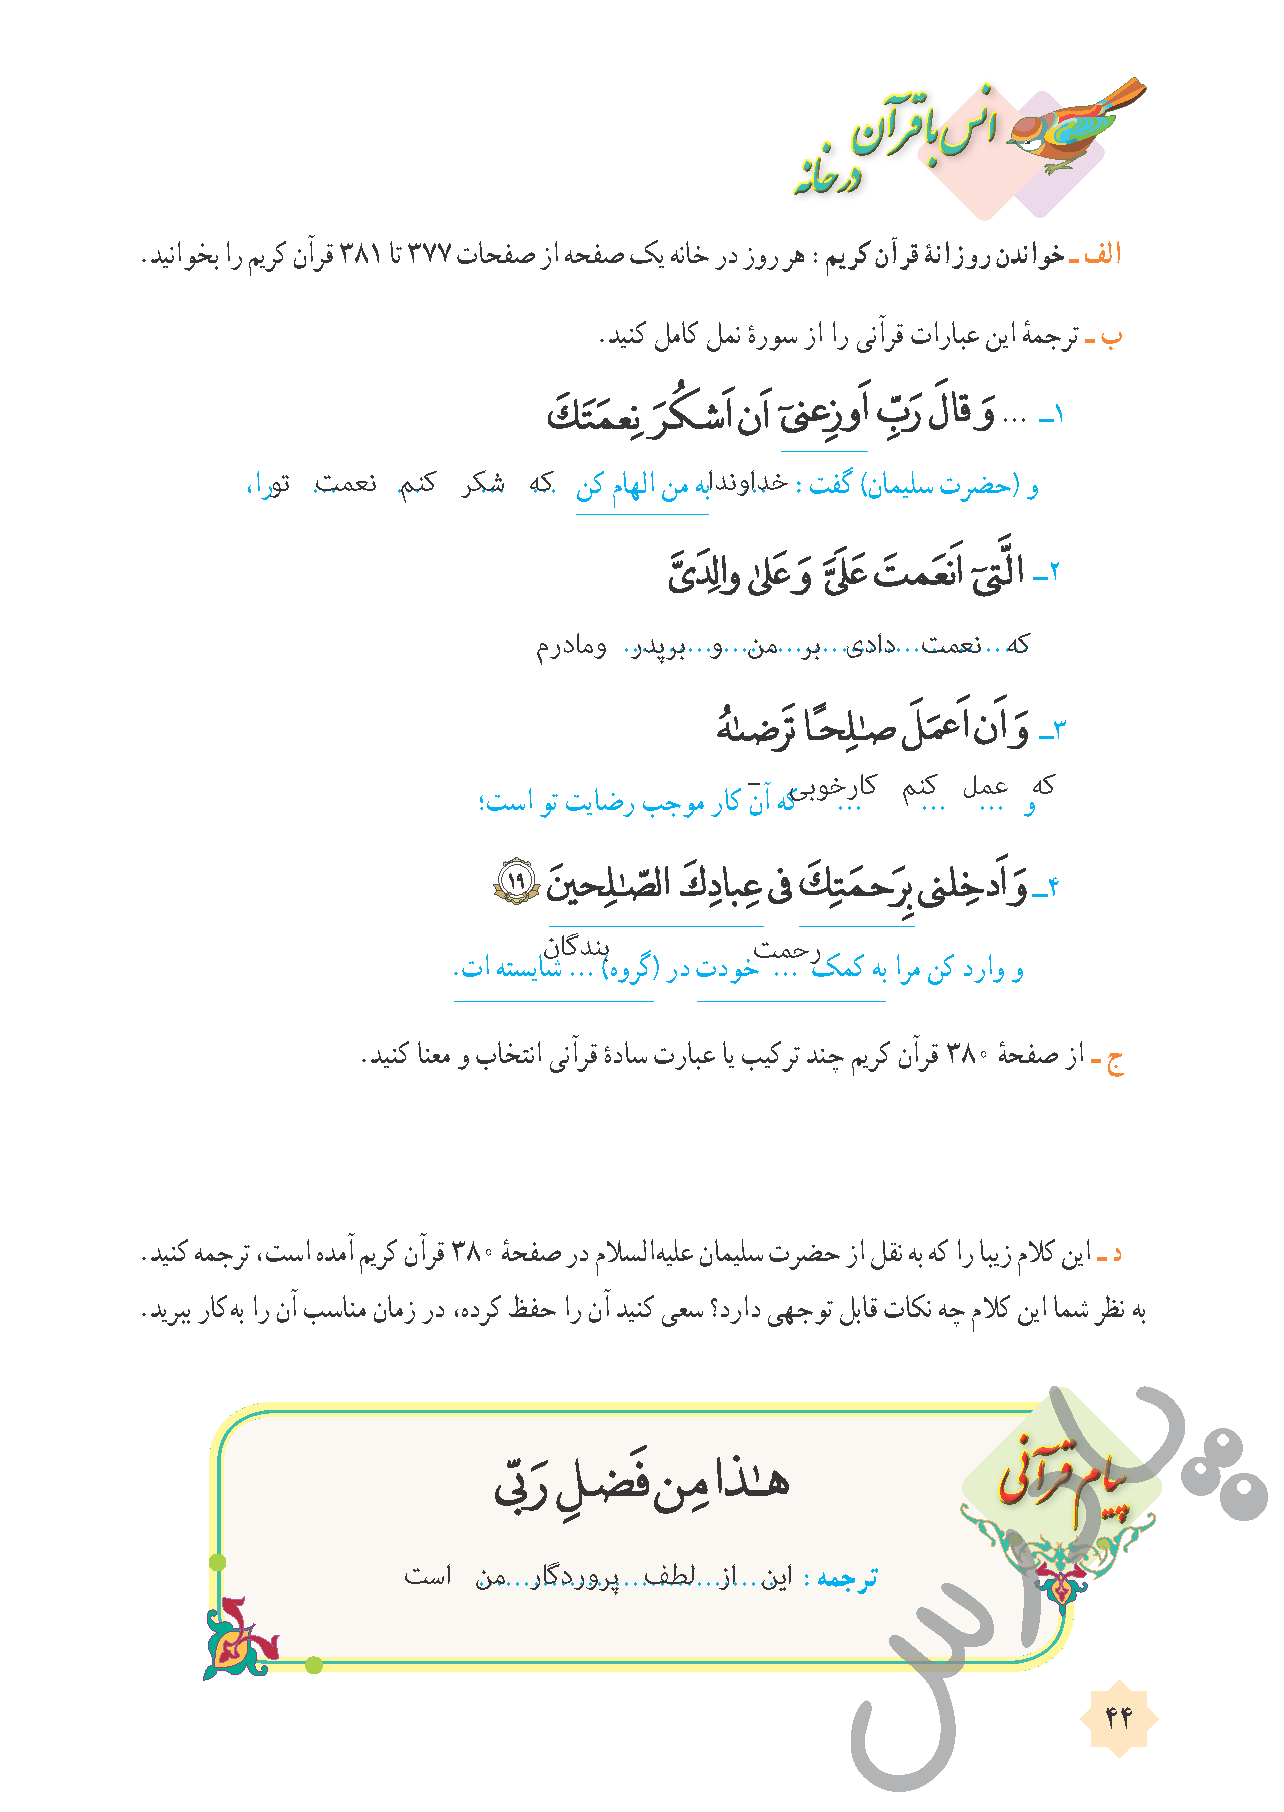 جواب فعالیت سوم درس 4 قرآن هشتم-جلسه اول